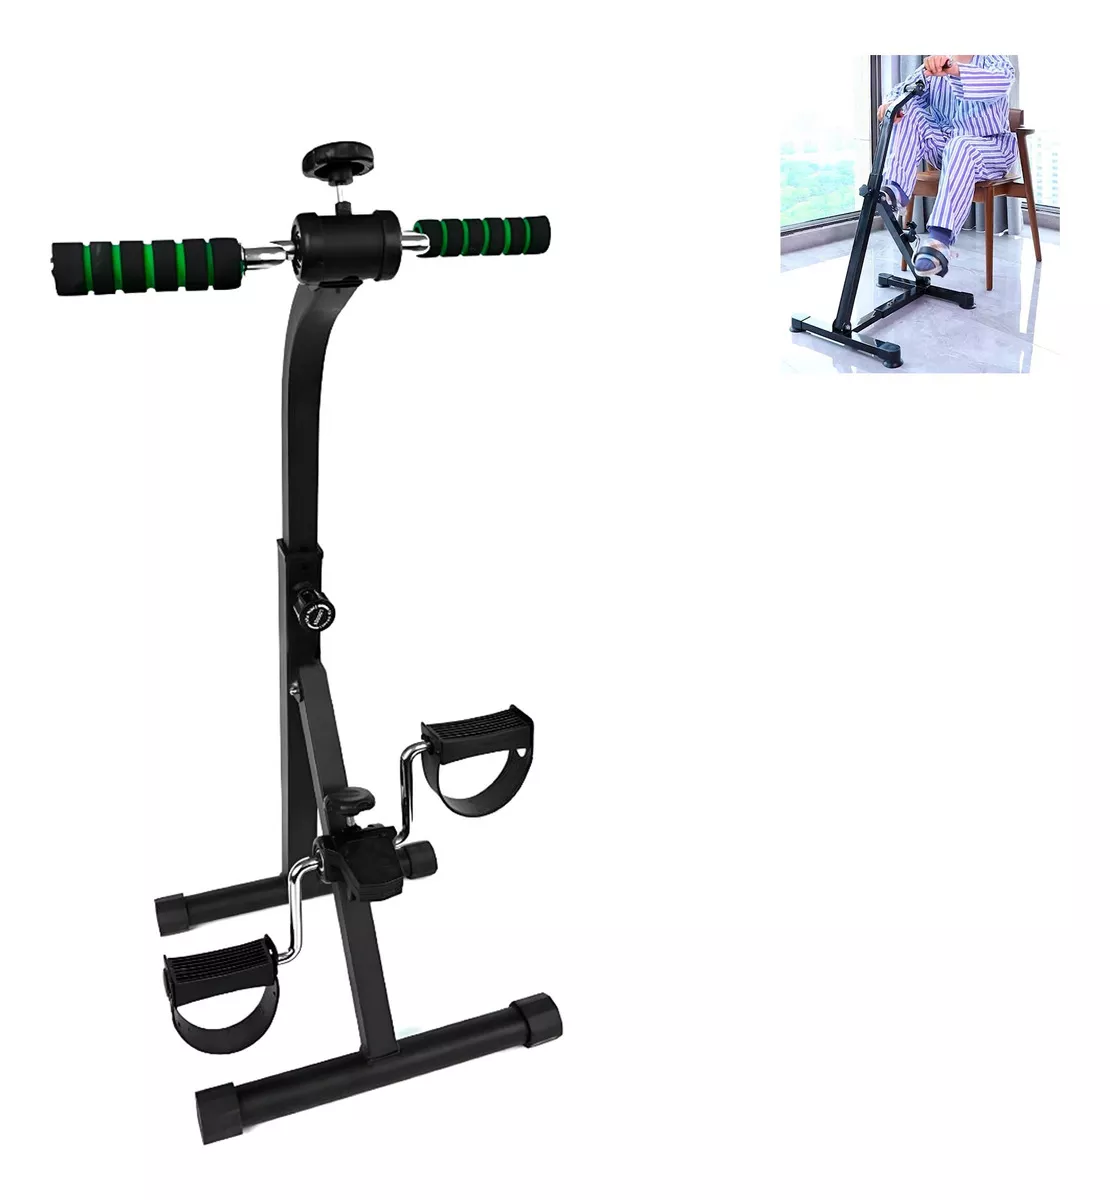 Primera imagen para búsqueda de cicloergometro bicicleta para rehabilitacion fisica